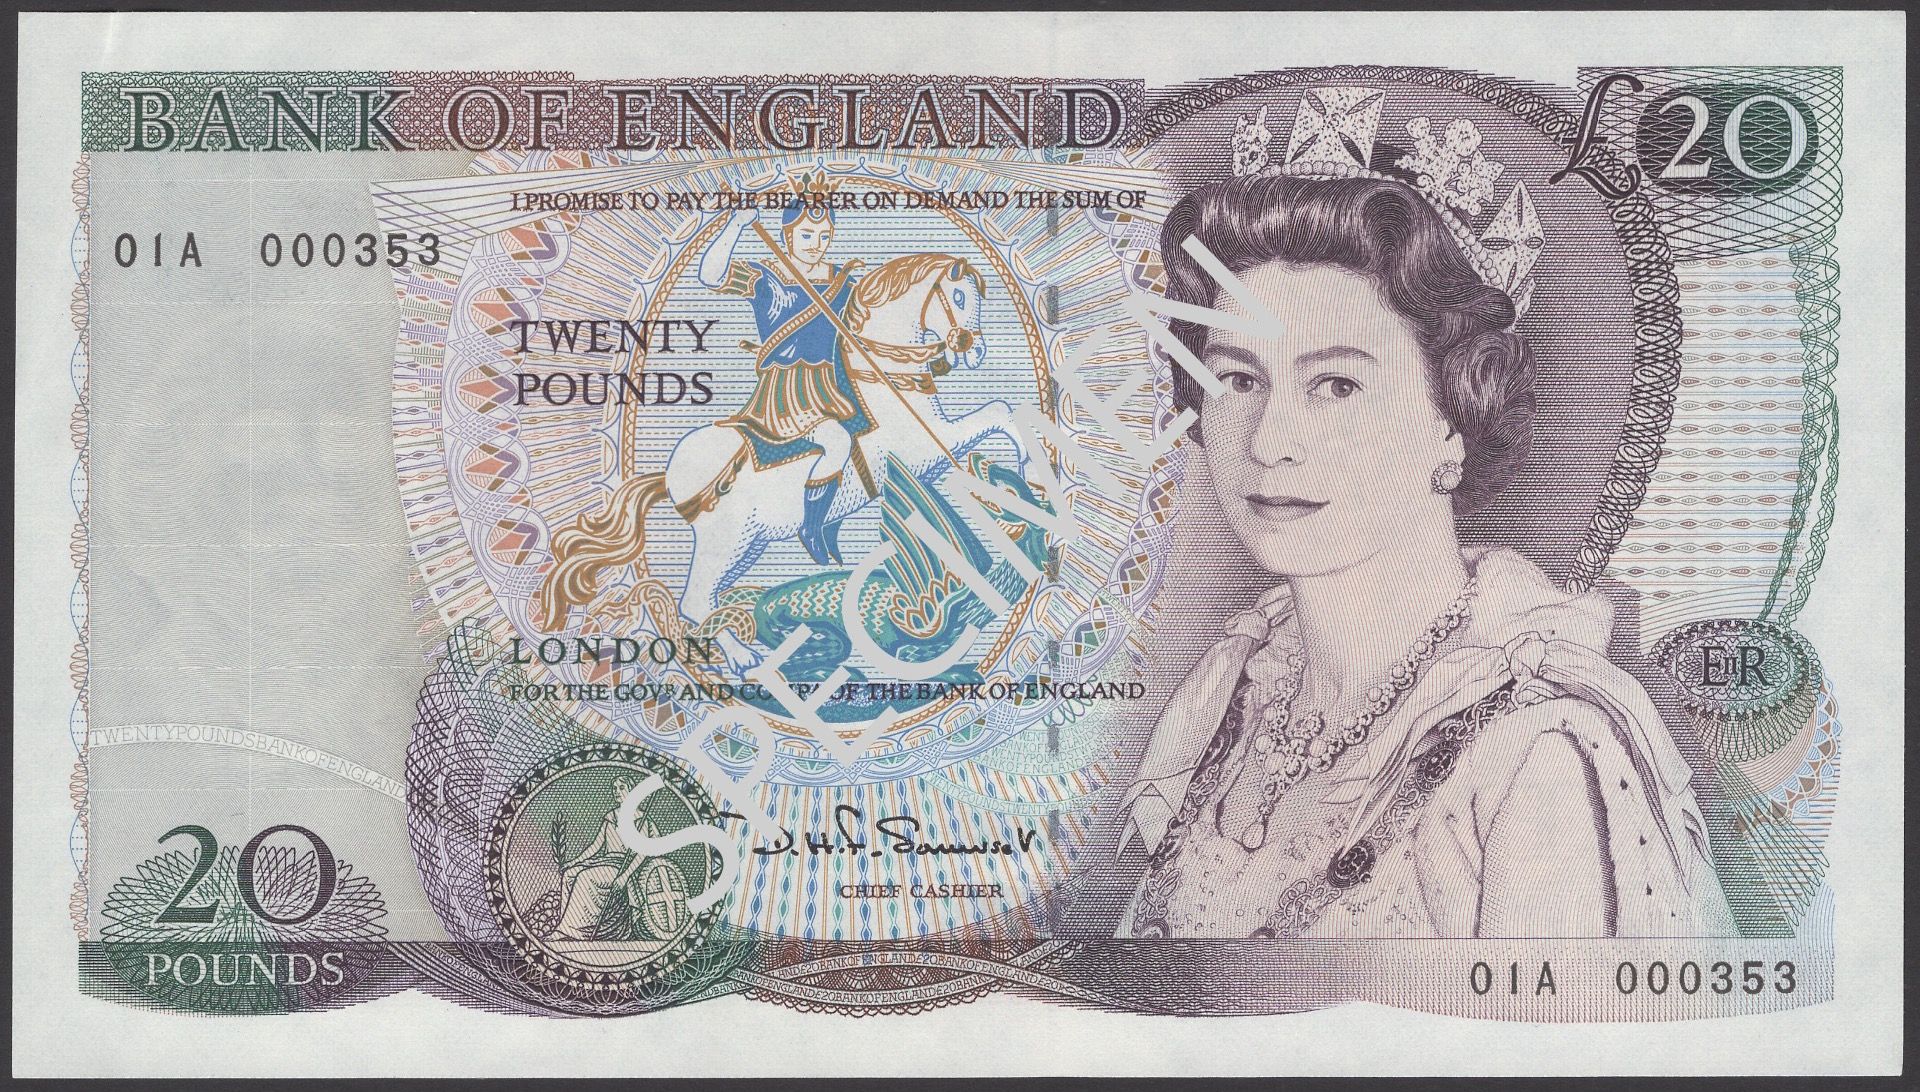 Bank of England, David H. F. Somerset, Â£20, 15 November 1984, serial number 01A 000353, crea...